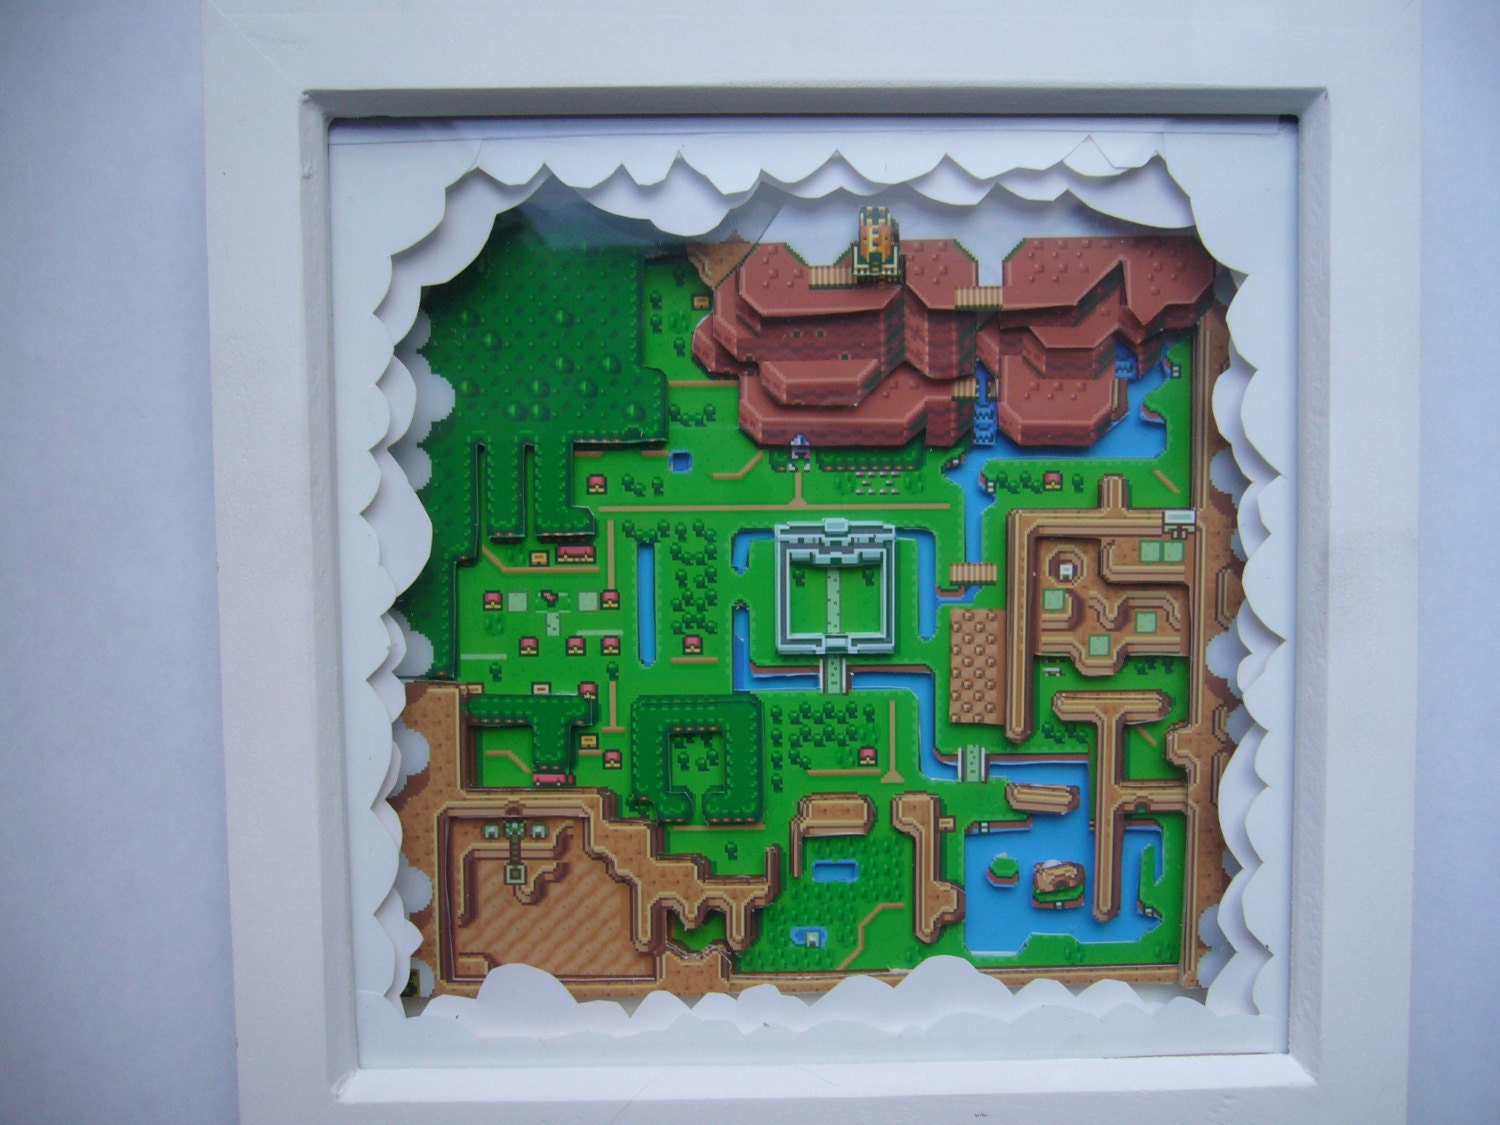 Legend of Zelda Hyrule 3D Map Diorama Art Snes Super Nintendo